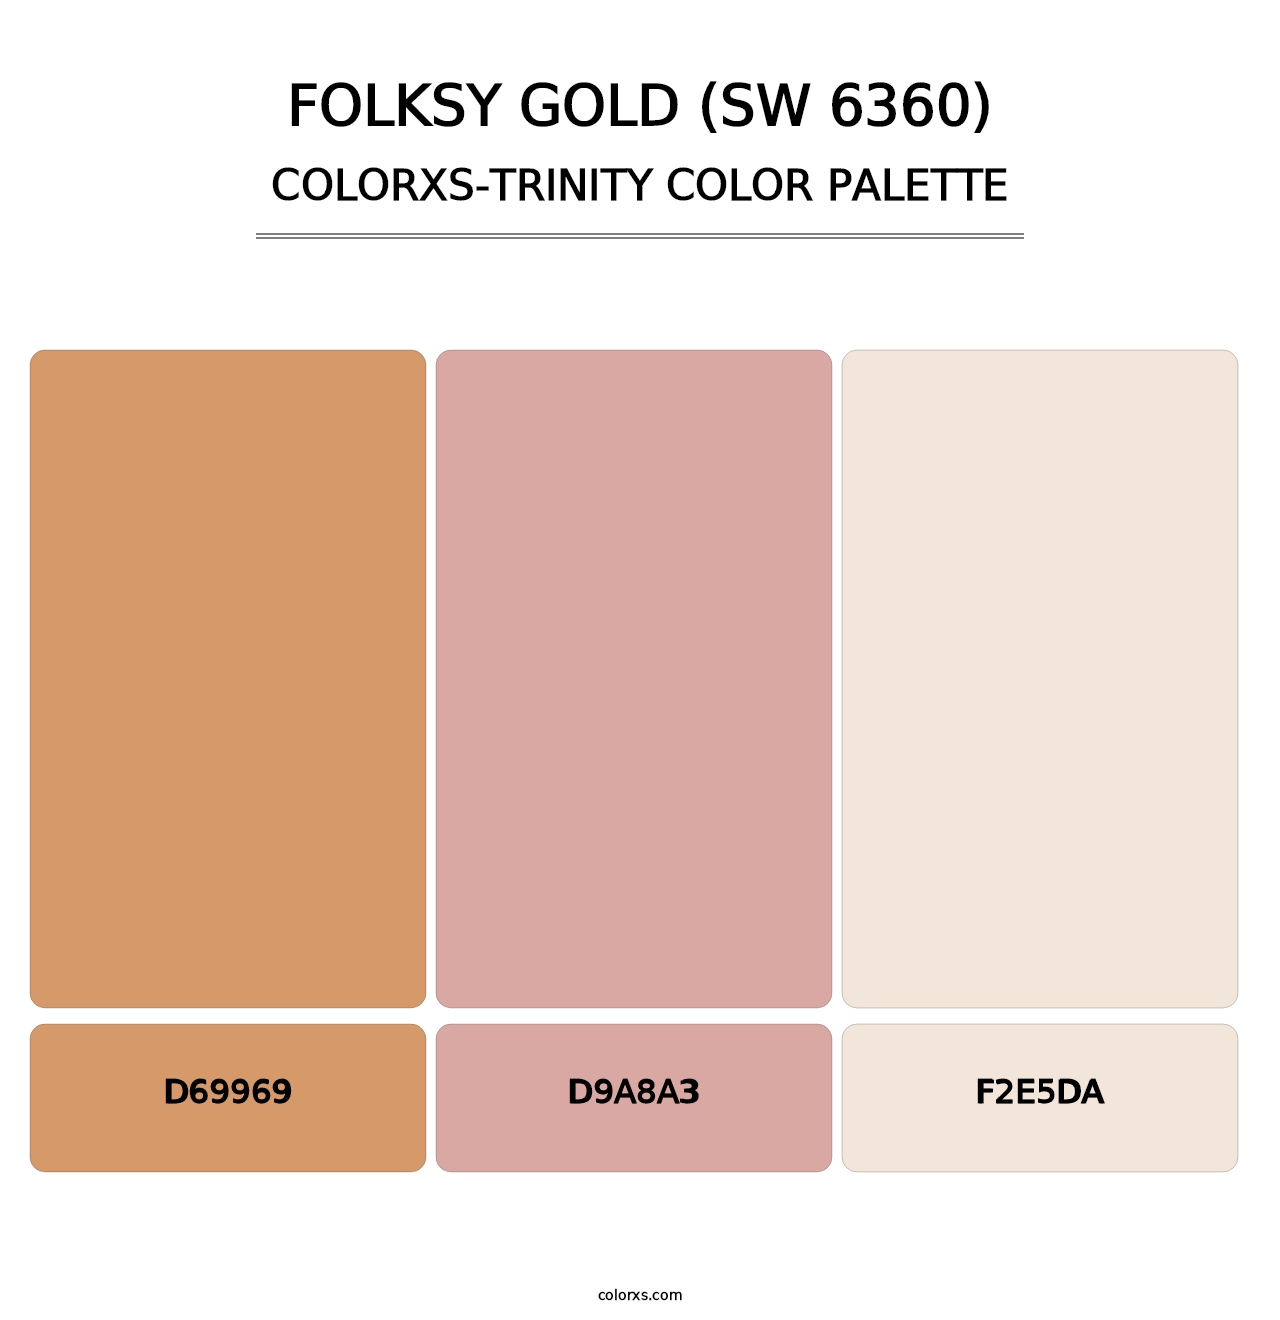 Folksy Gold (SW 6360) - Colorxs Trinity Palette